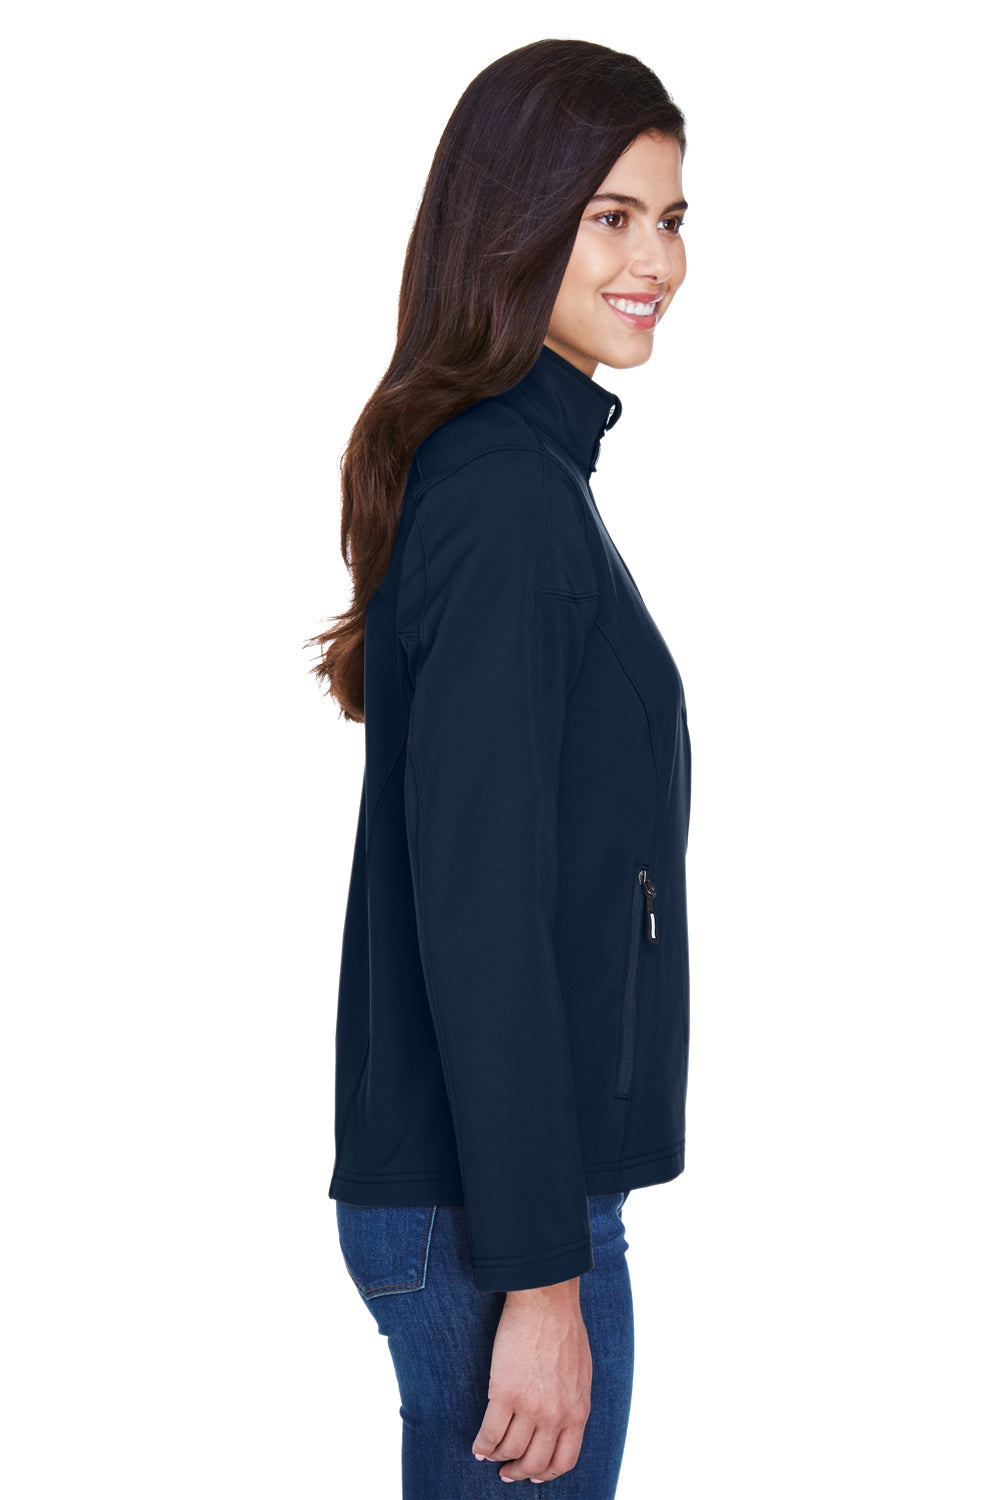 Core 365 78184 Womens Cruise Water Resistant Full Zip Jacket Navy Blue Side